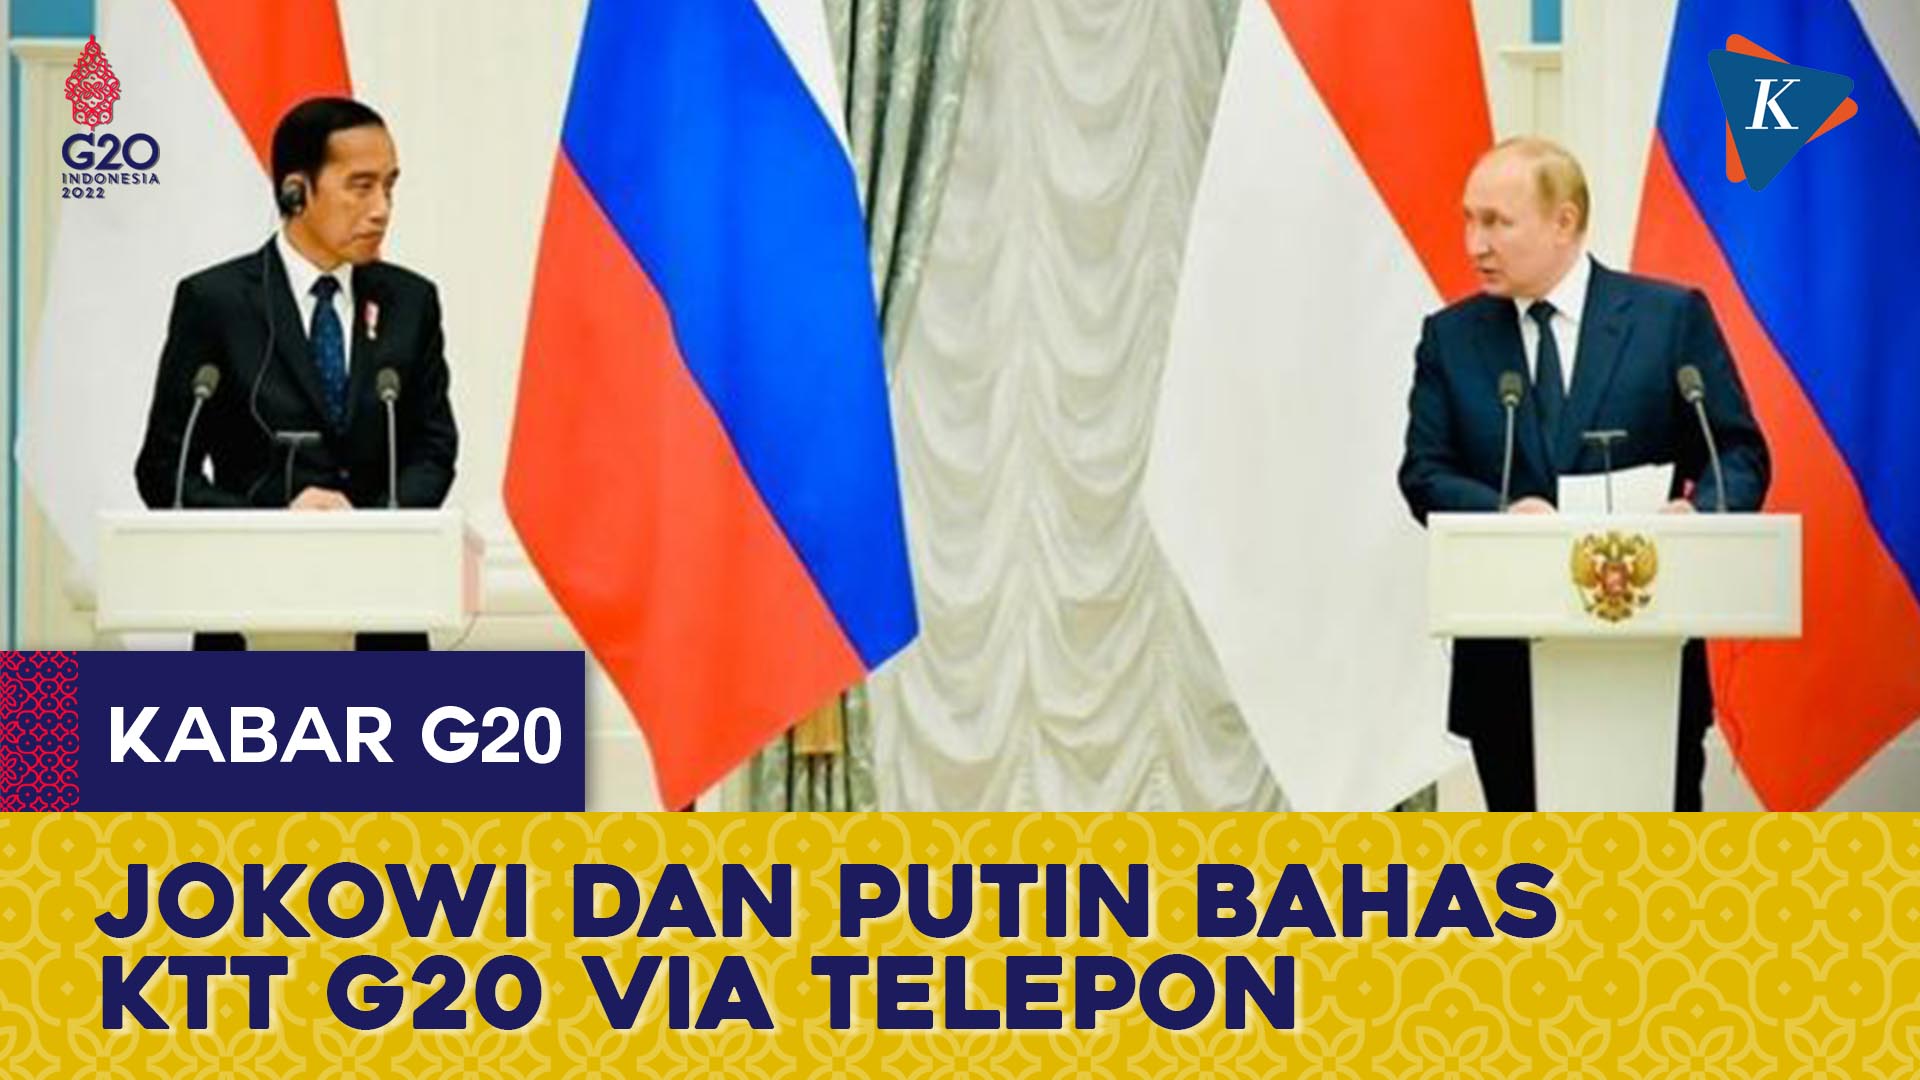 Putin Bahas KTT G20 Dengan Jokowi Lewat Telepon